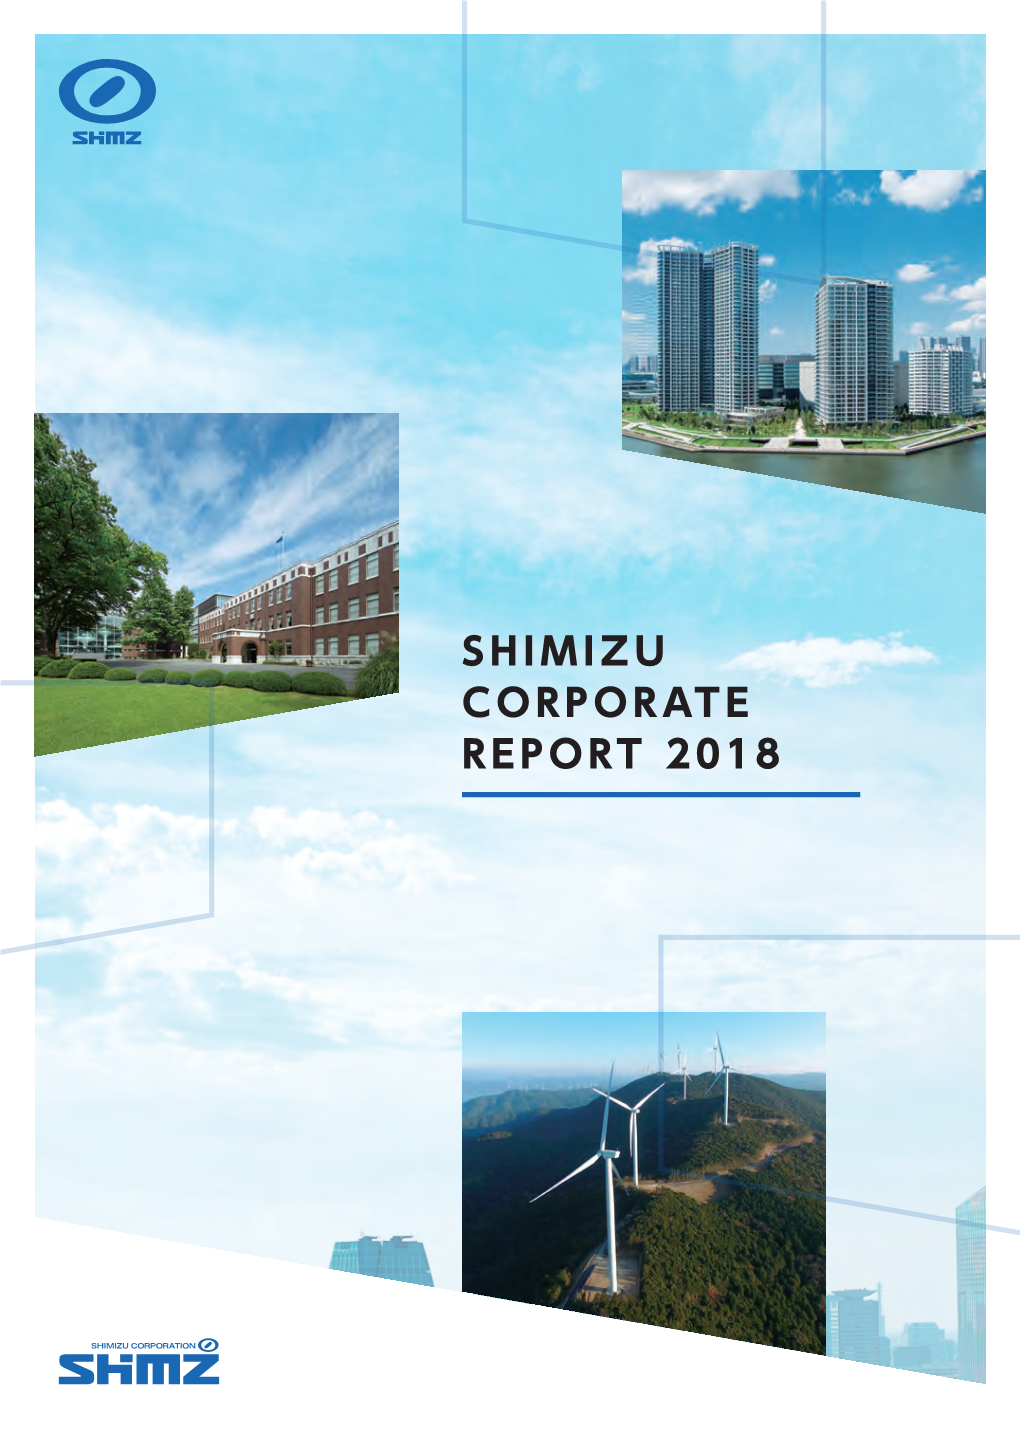 Published Shimizu Corporate Report 2018